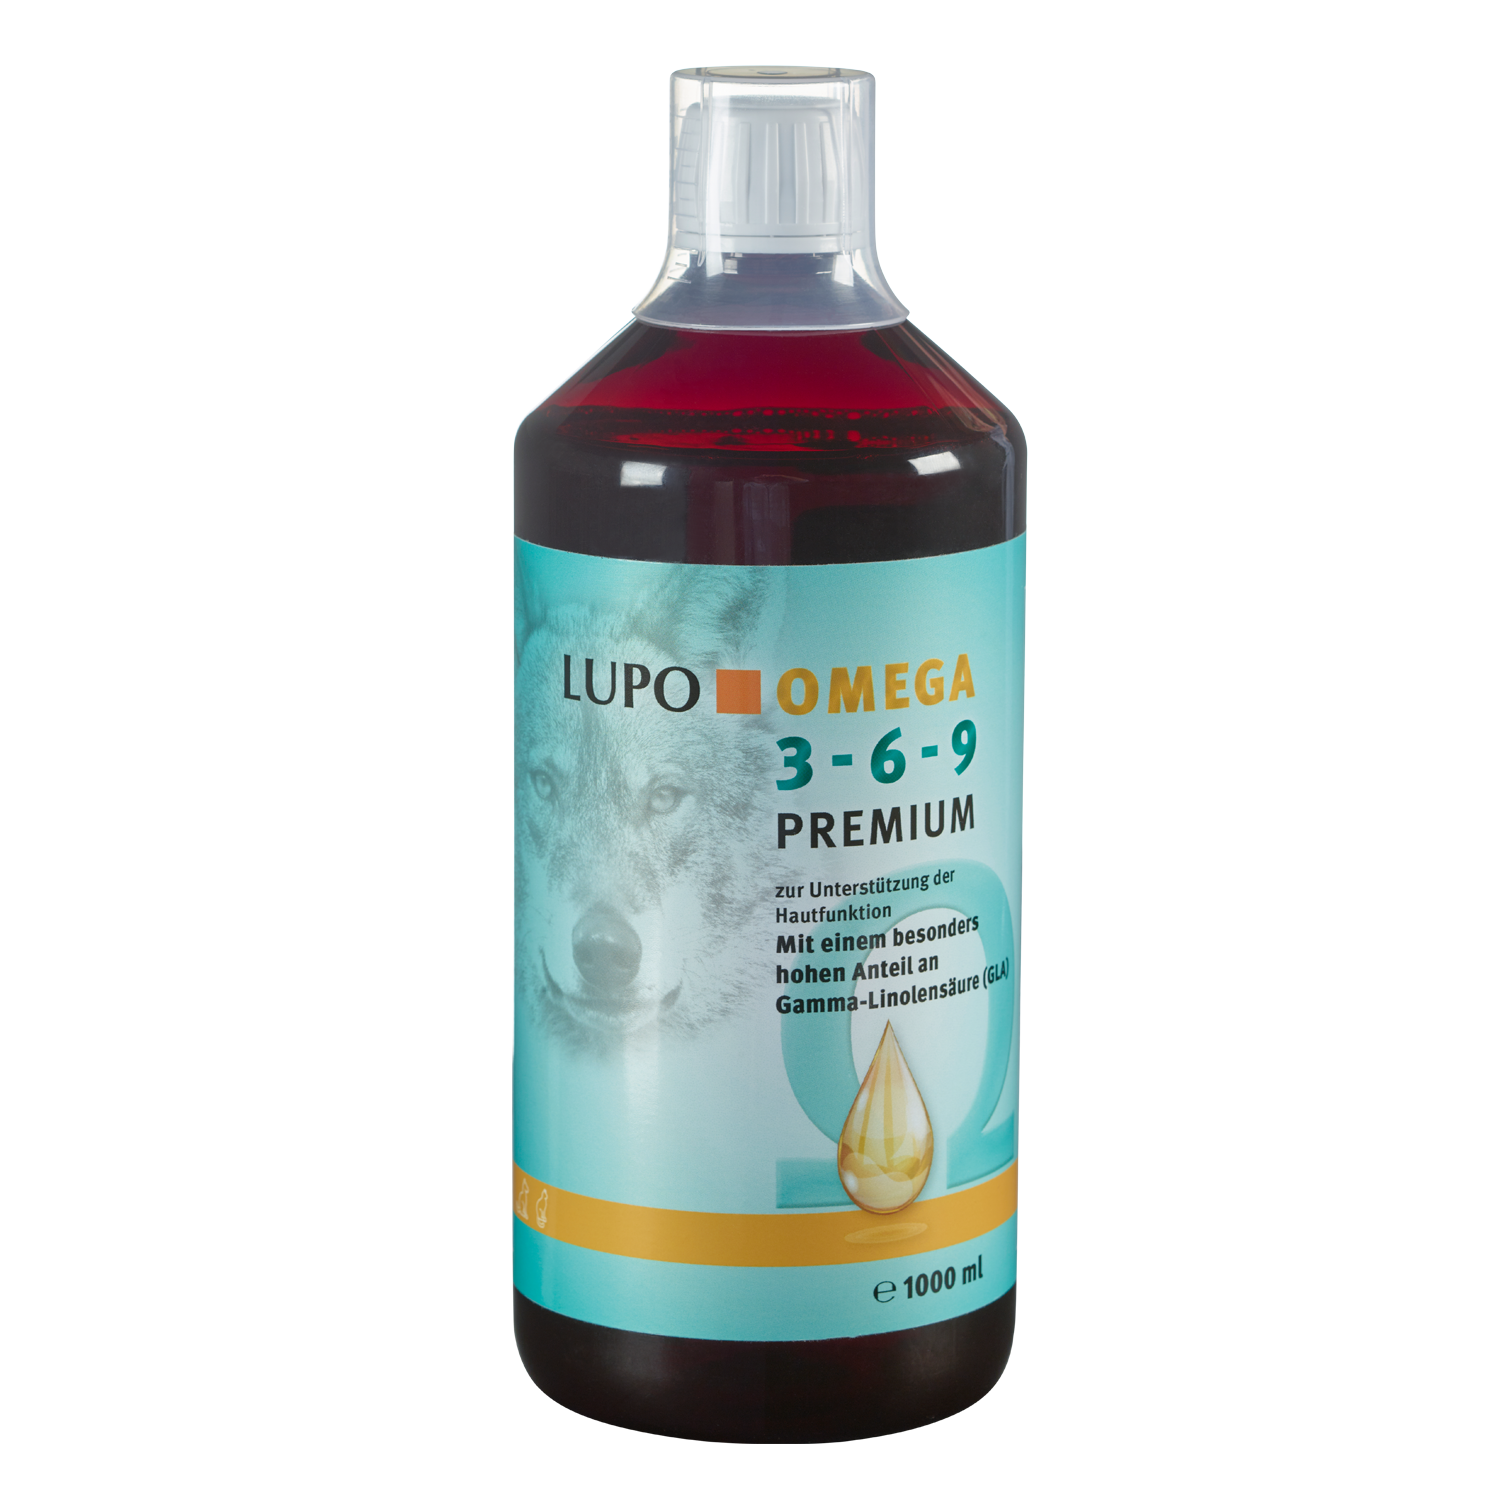 LUPO - Omega "3-6-9 Premium" 1000ml